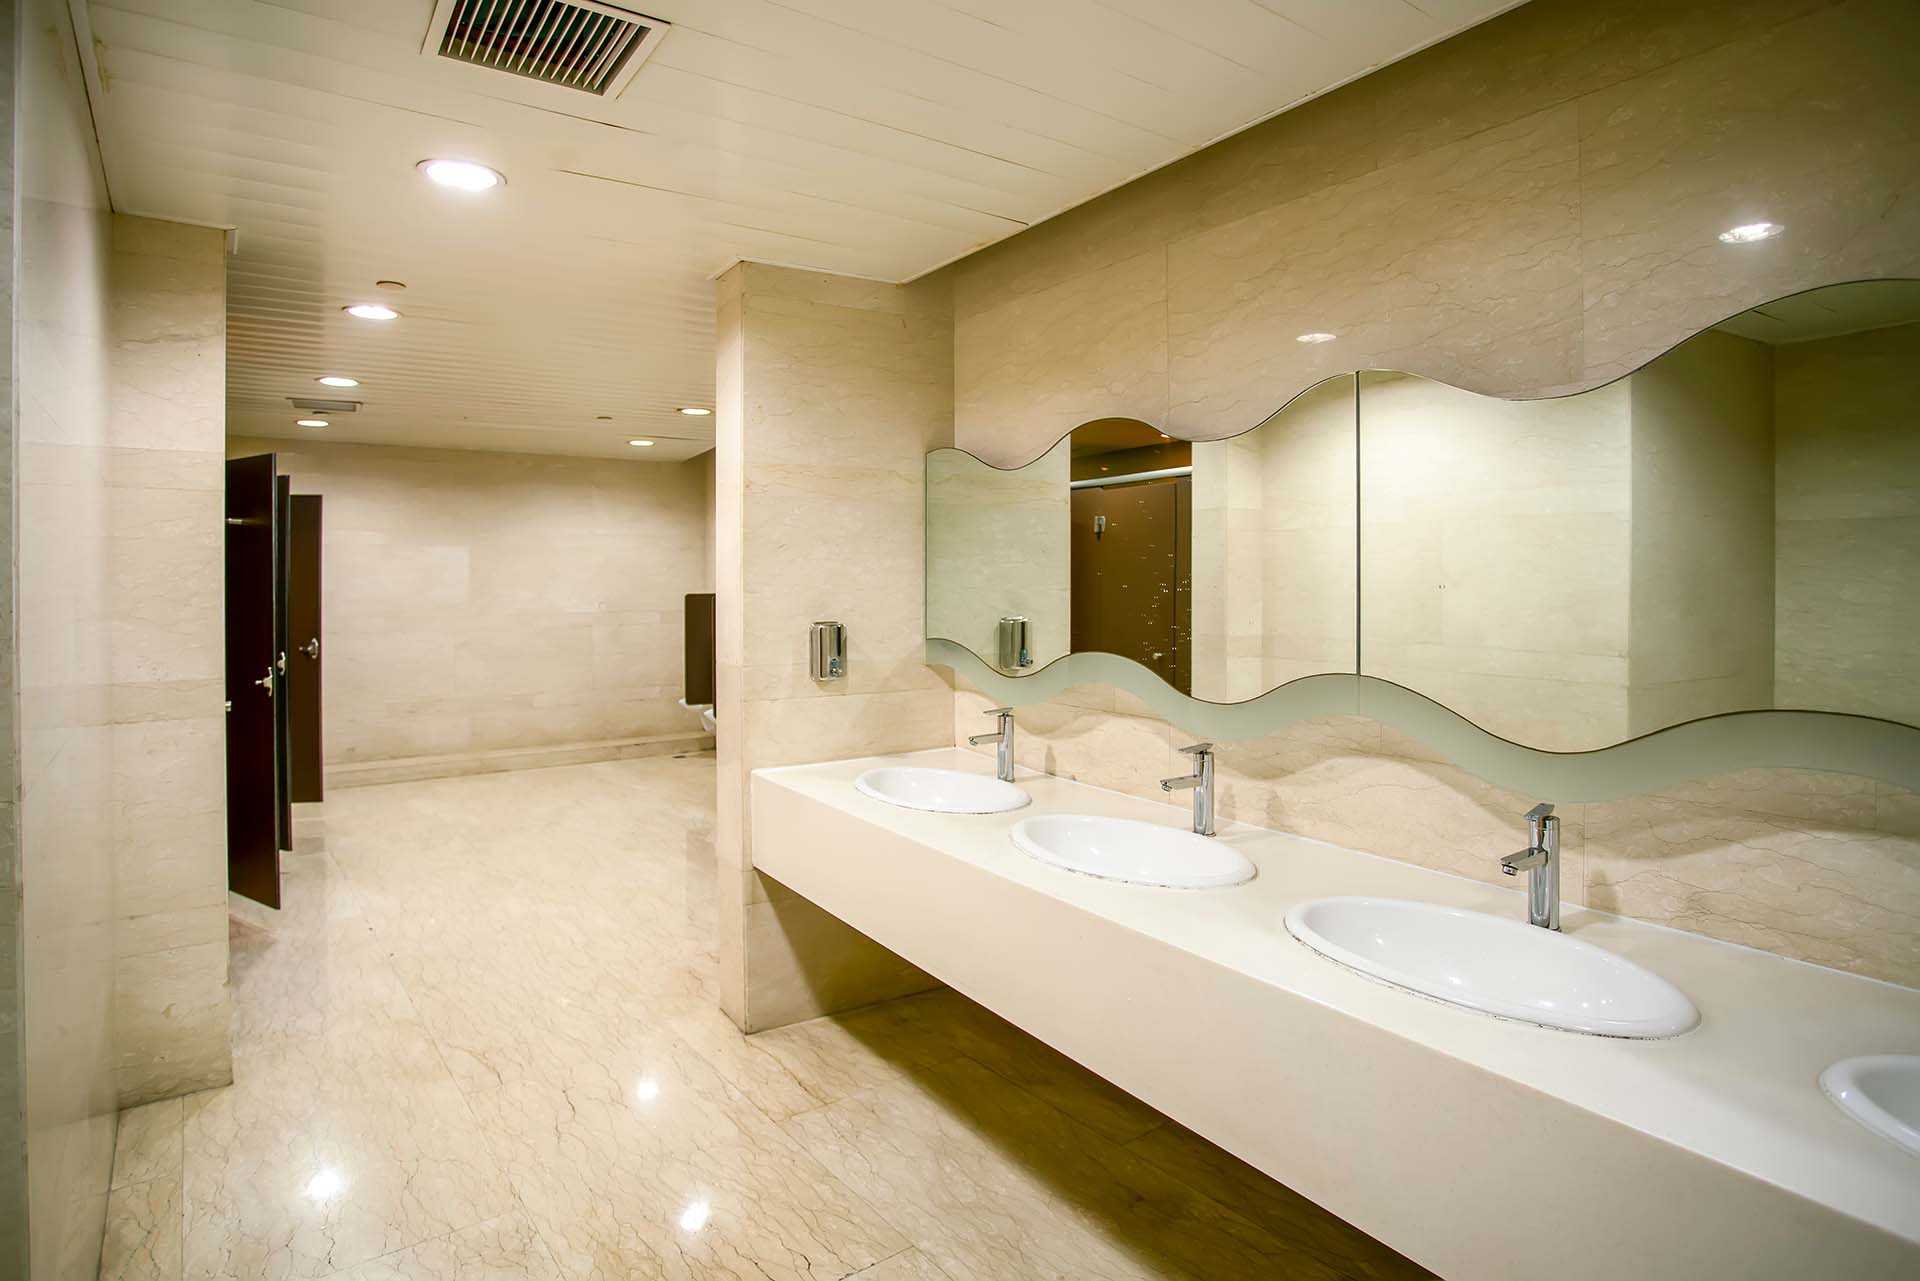 Commercial Construction - Mall Bathroom